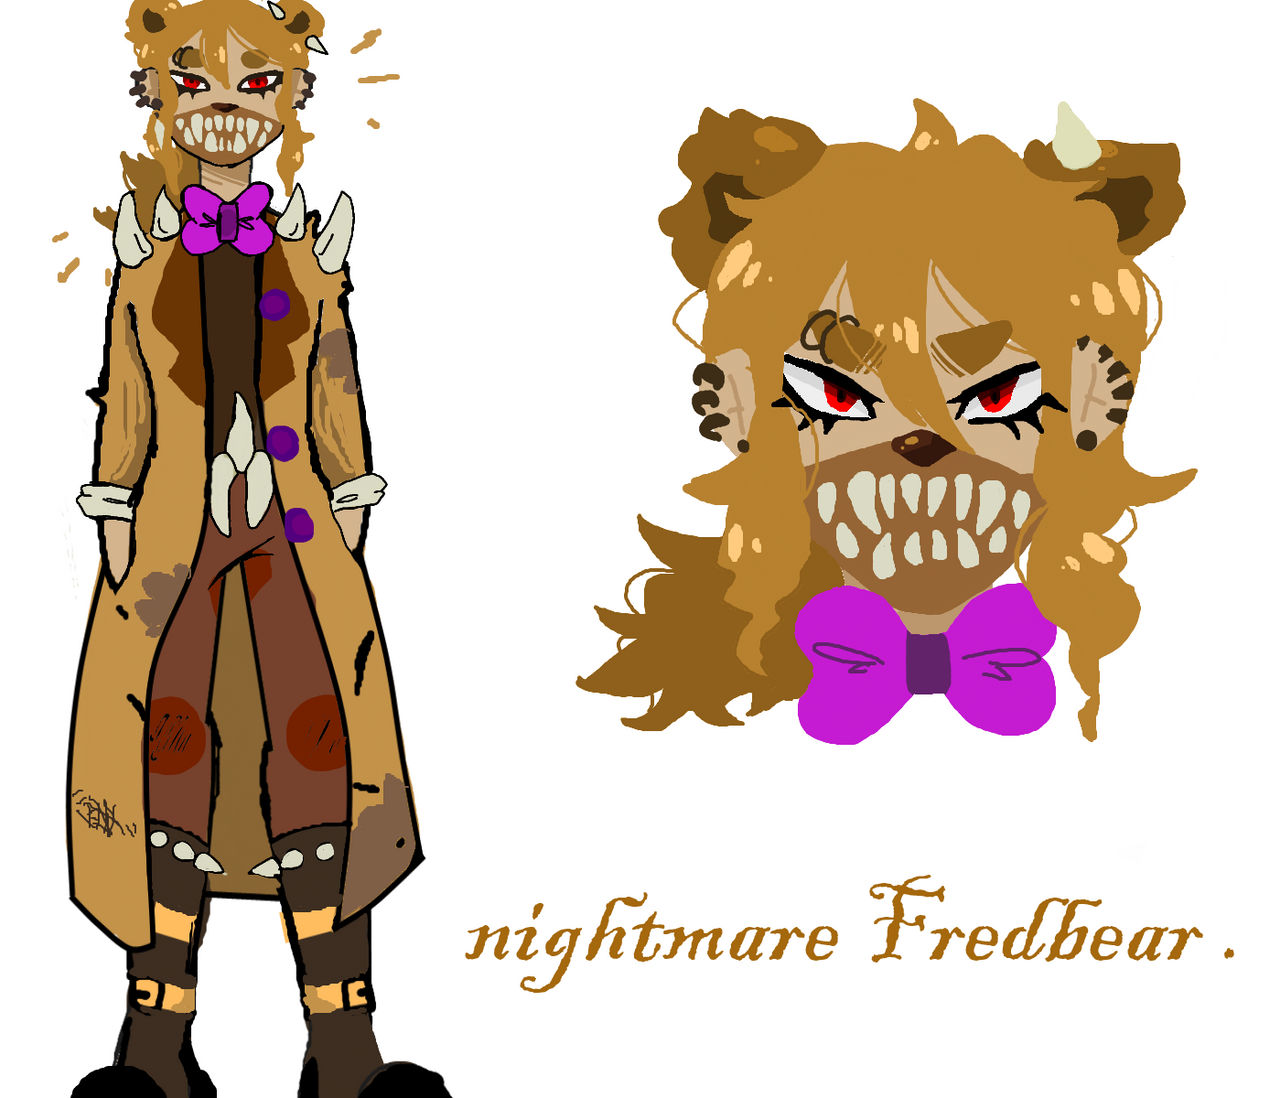 Nightmare Fredbear Action Figure Concept by JonlukevilleTVart on DeviantArt